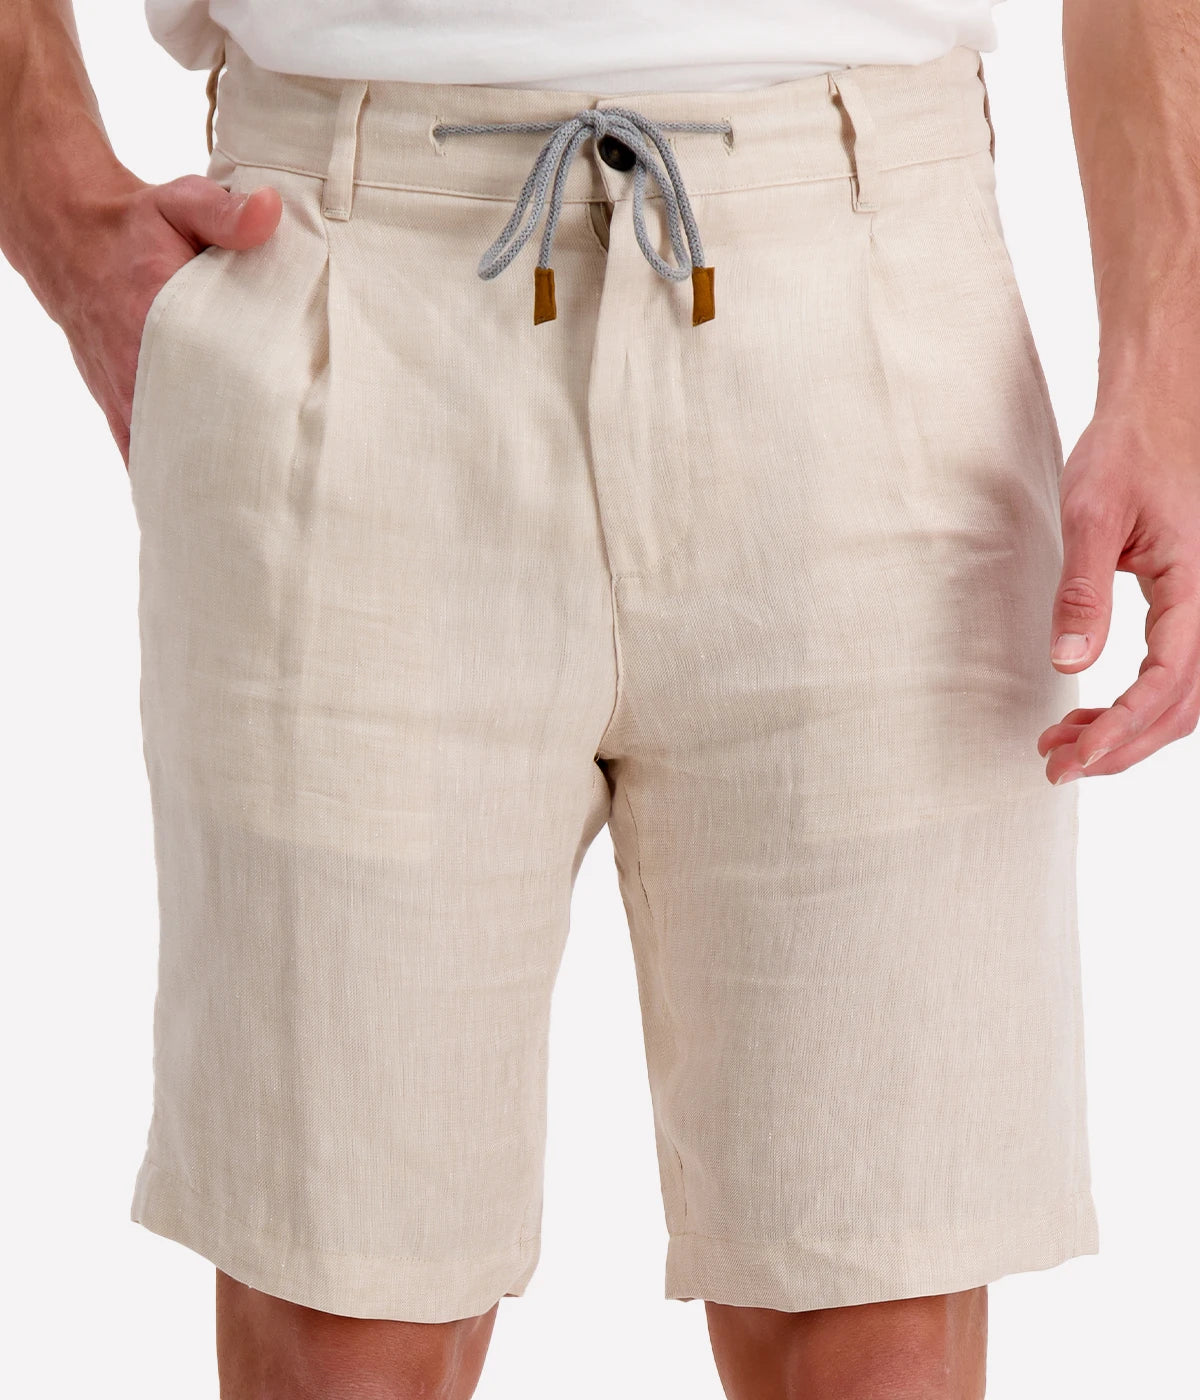 Bermuda Tie Shorts in Sand